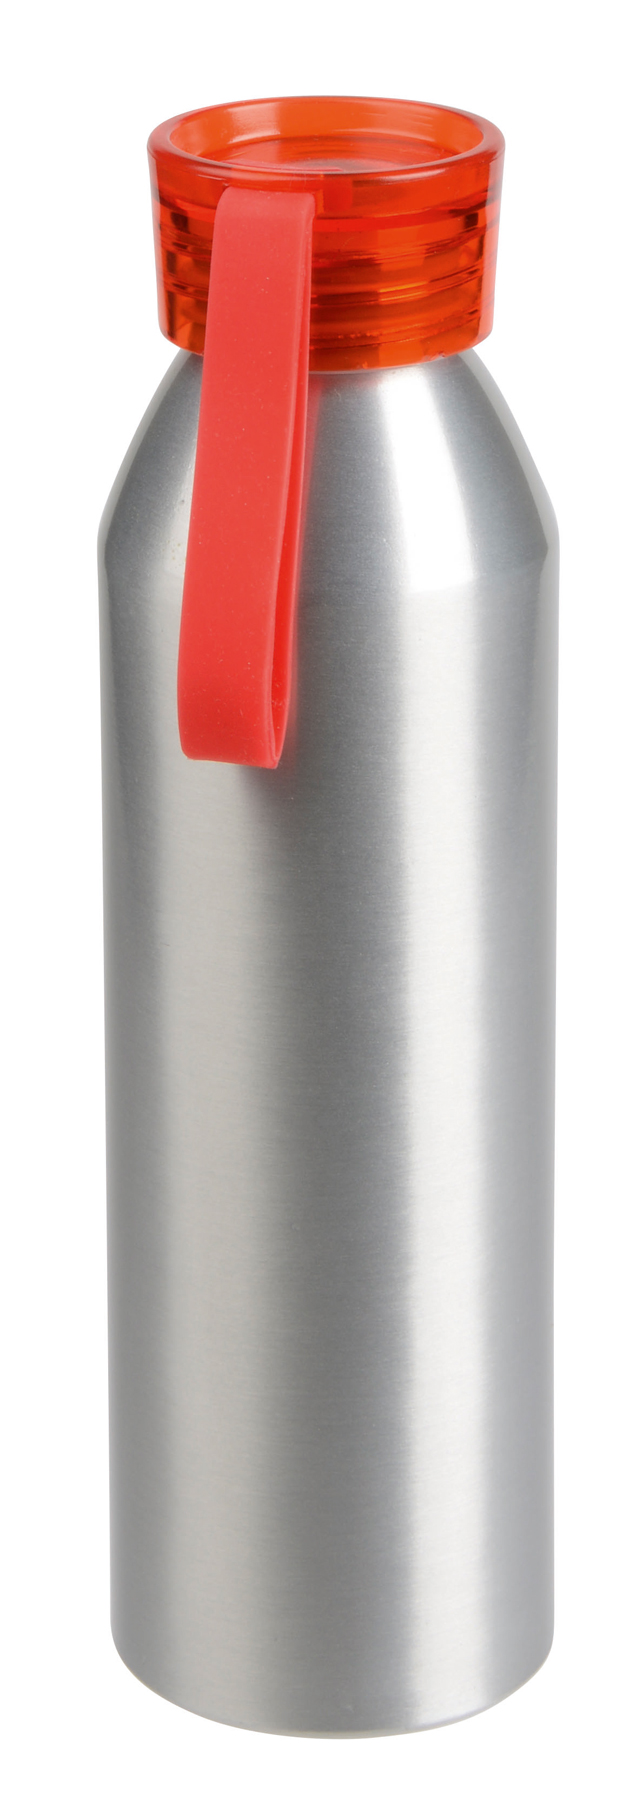 Aluminiowa butelka COLOURED, czerwony